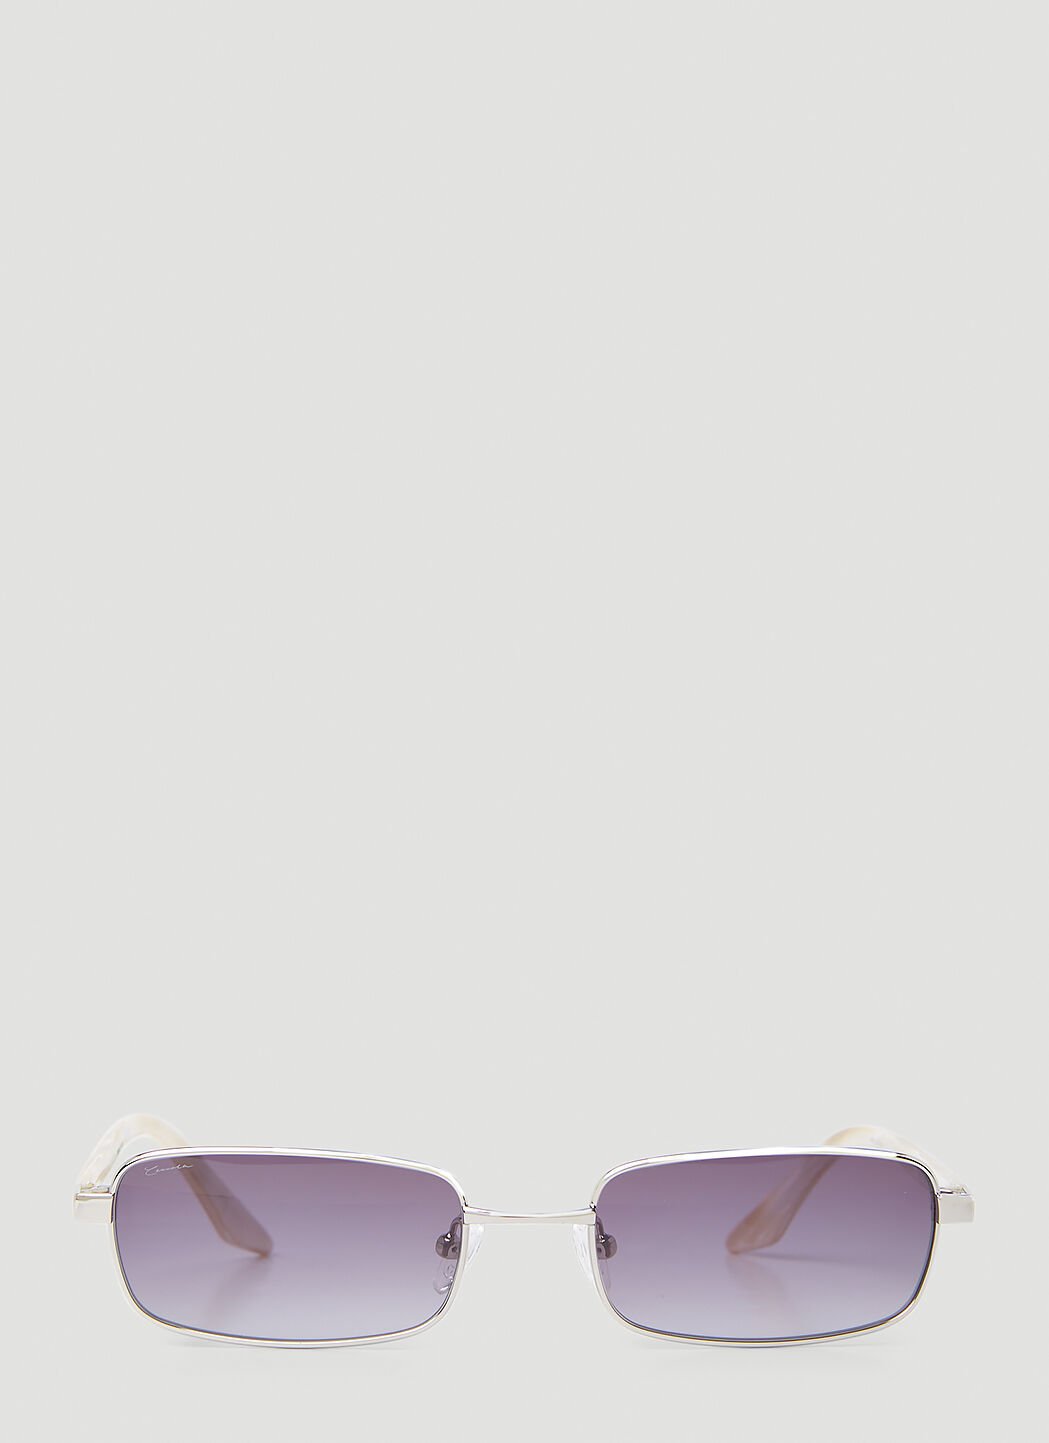 Lexxola Sunglasses for Men: Square & Rectangular Eyewear | LN-CC®